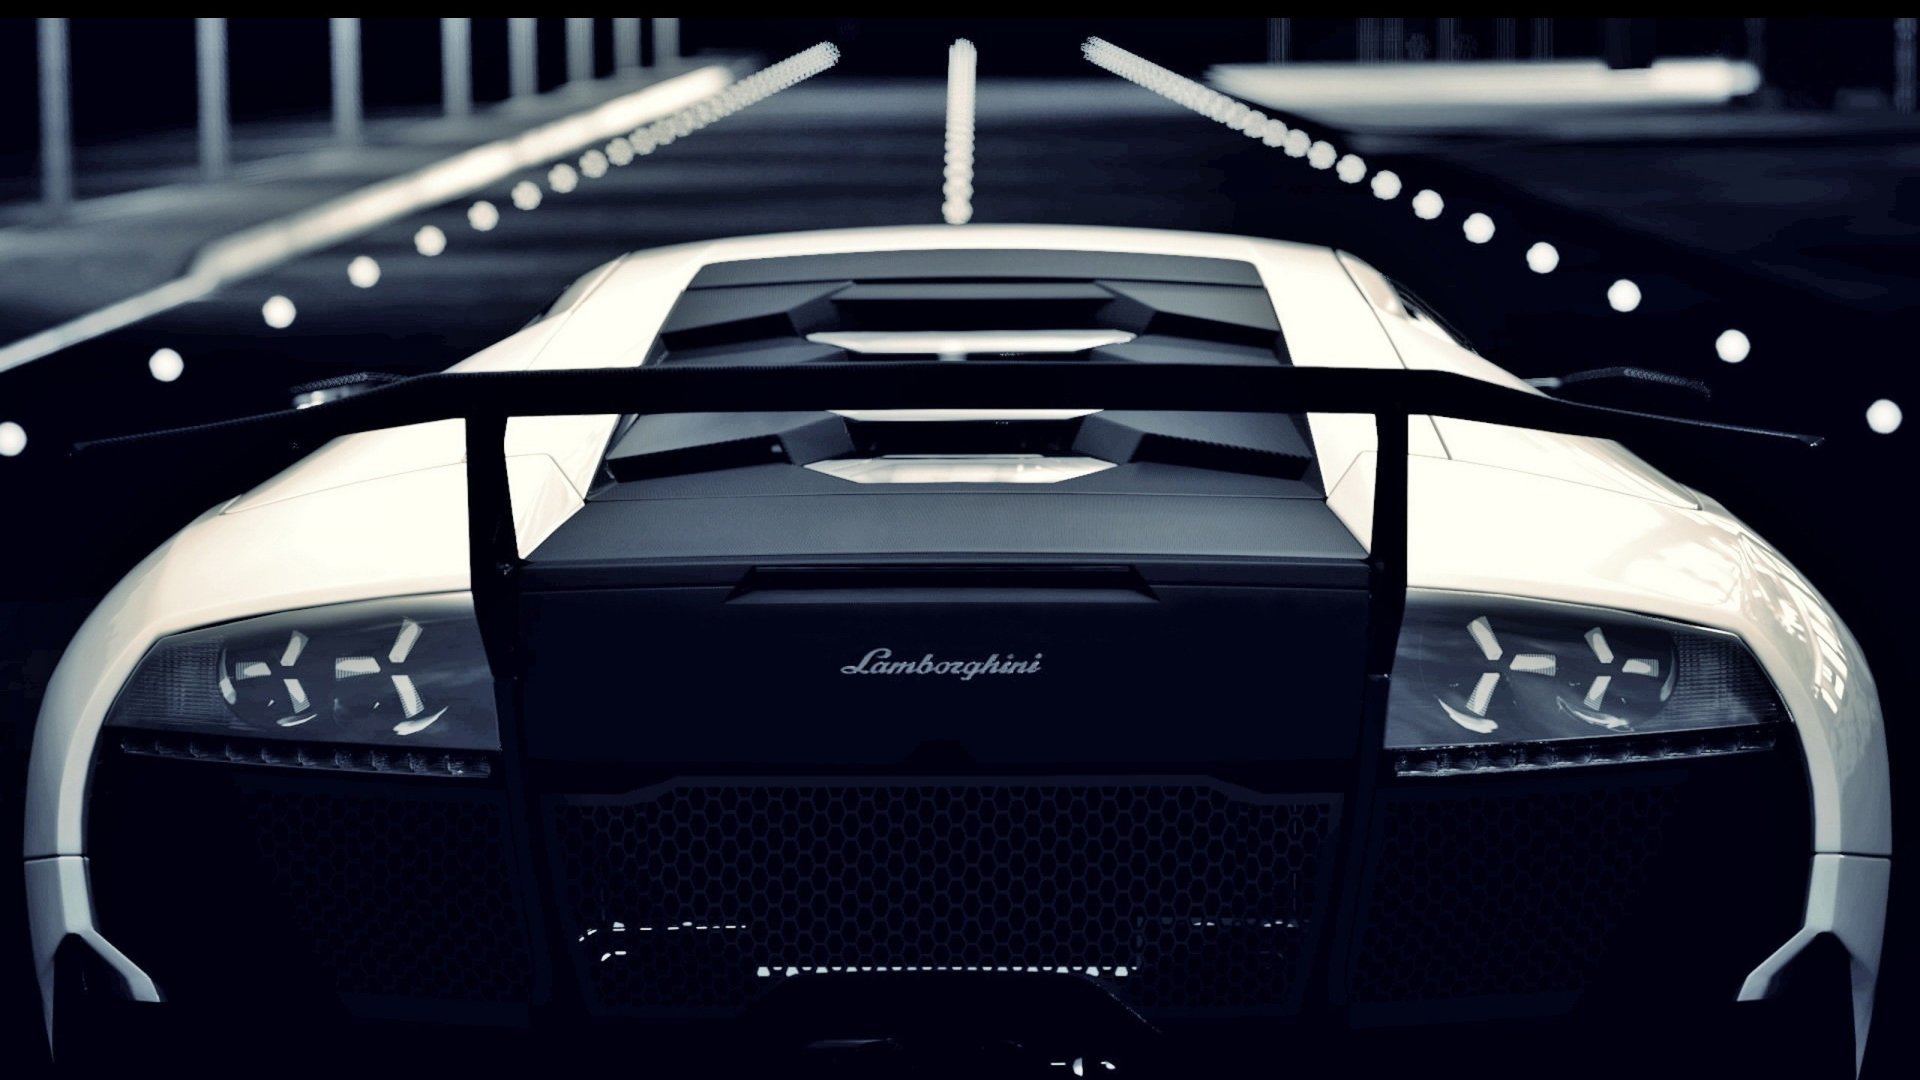 Awesome Lamborghini Murcielago free background ID:155273 for 1080p computer